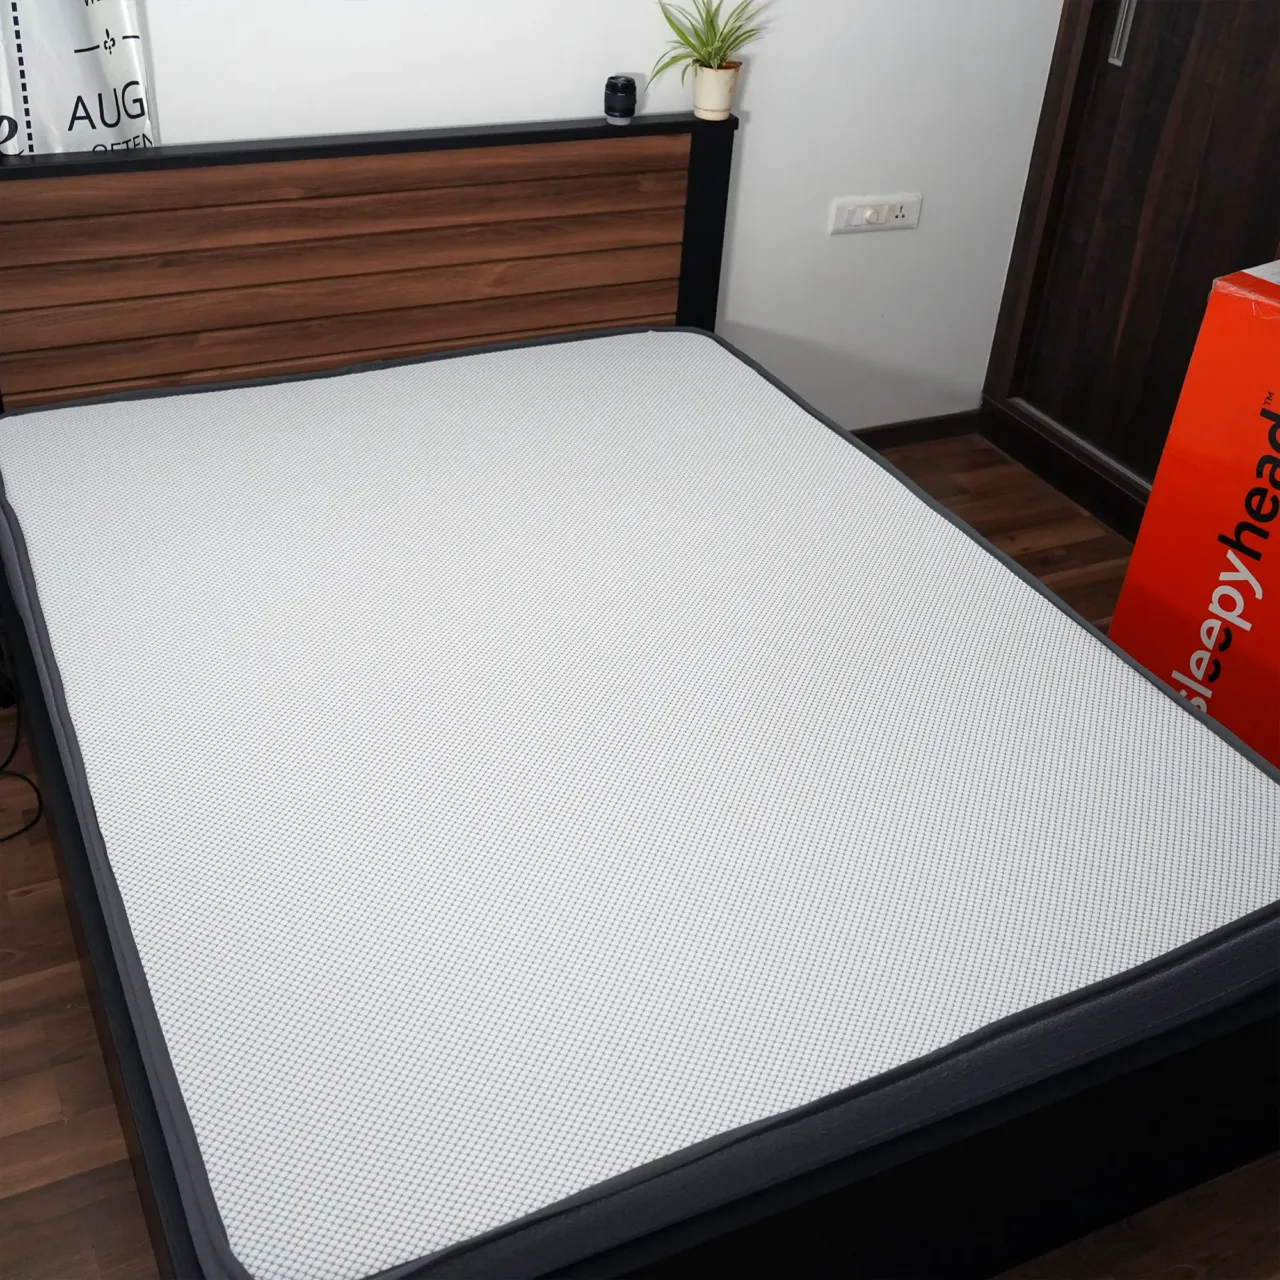 Sleepyhead Flip mattress reviews